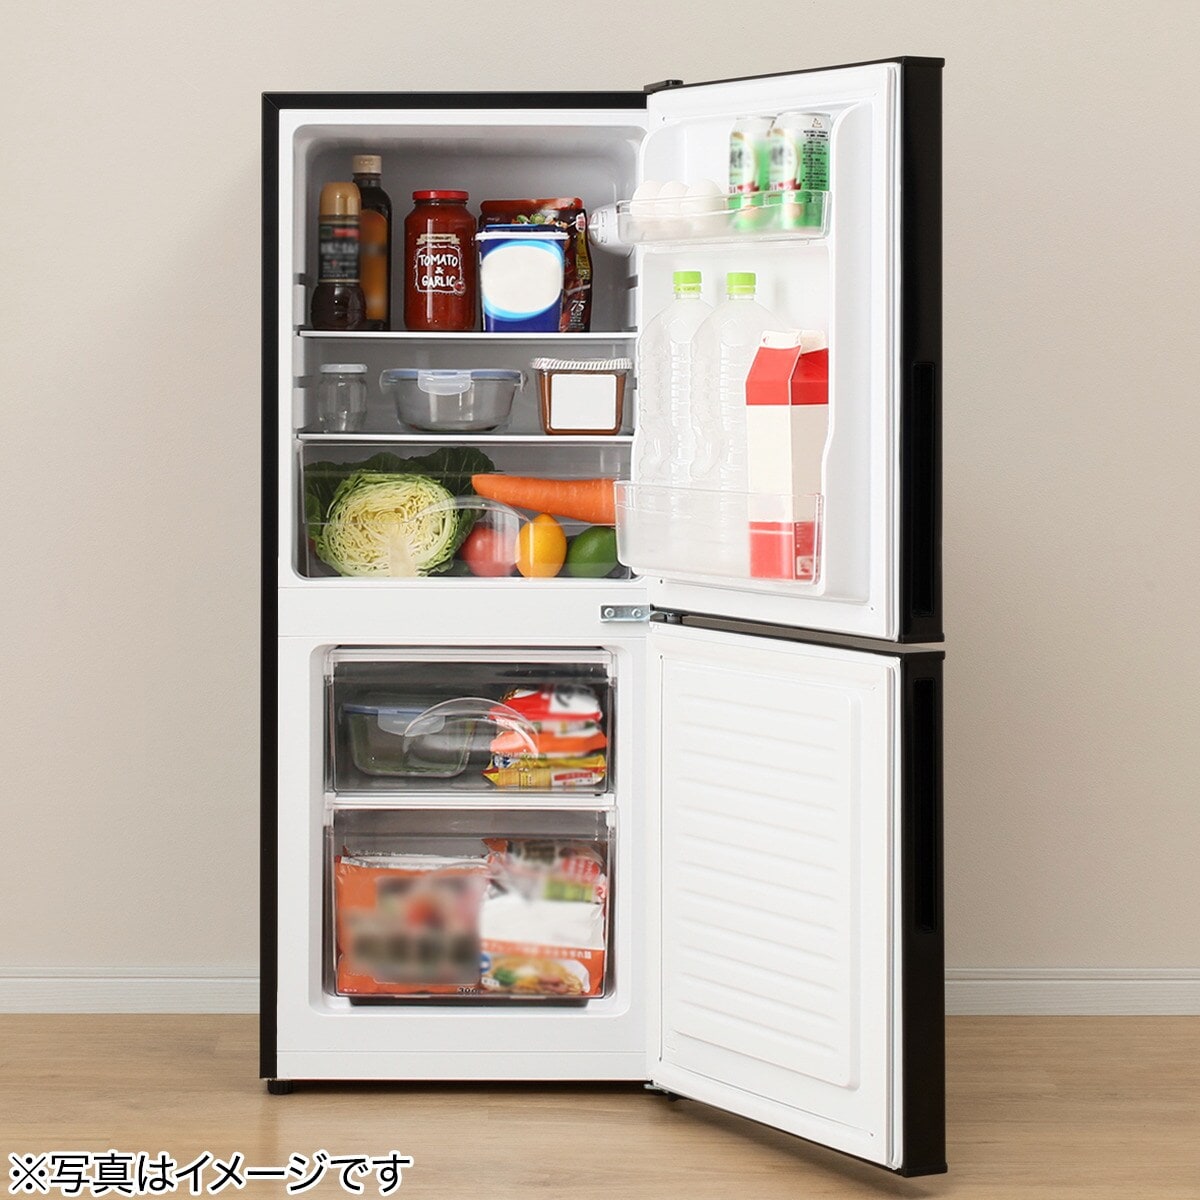 L 直冷式2ドア冷蔵庫 Nグラシア BK 延長保証付き通販   ニトリ